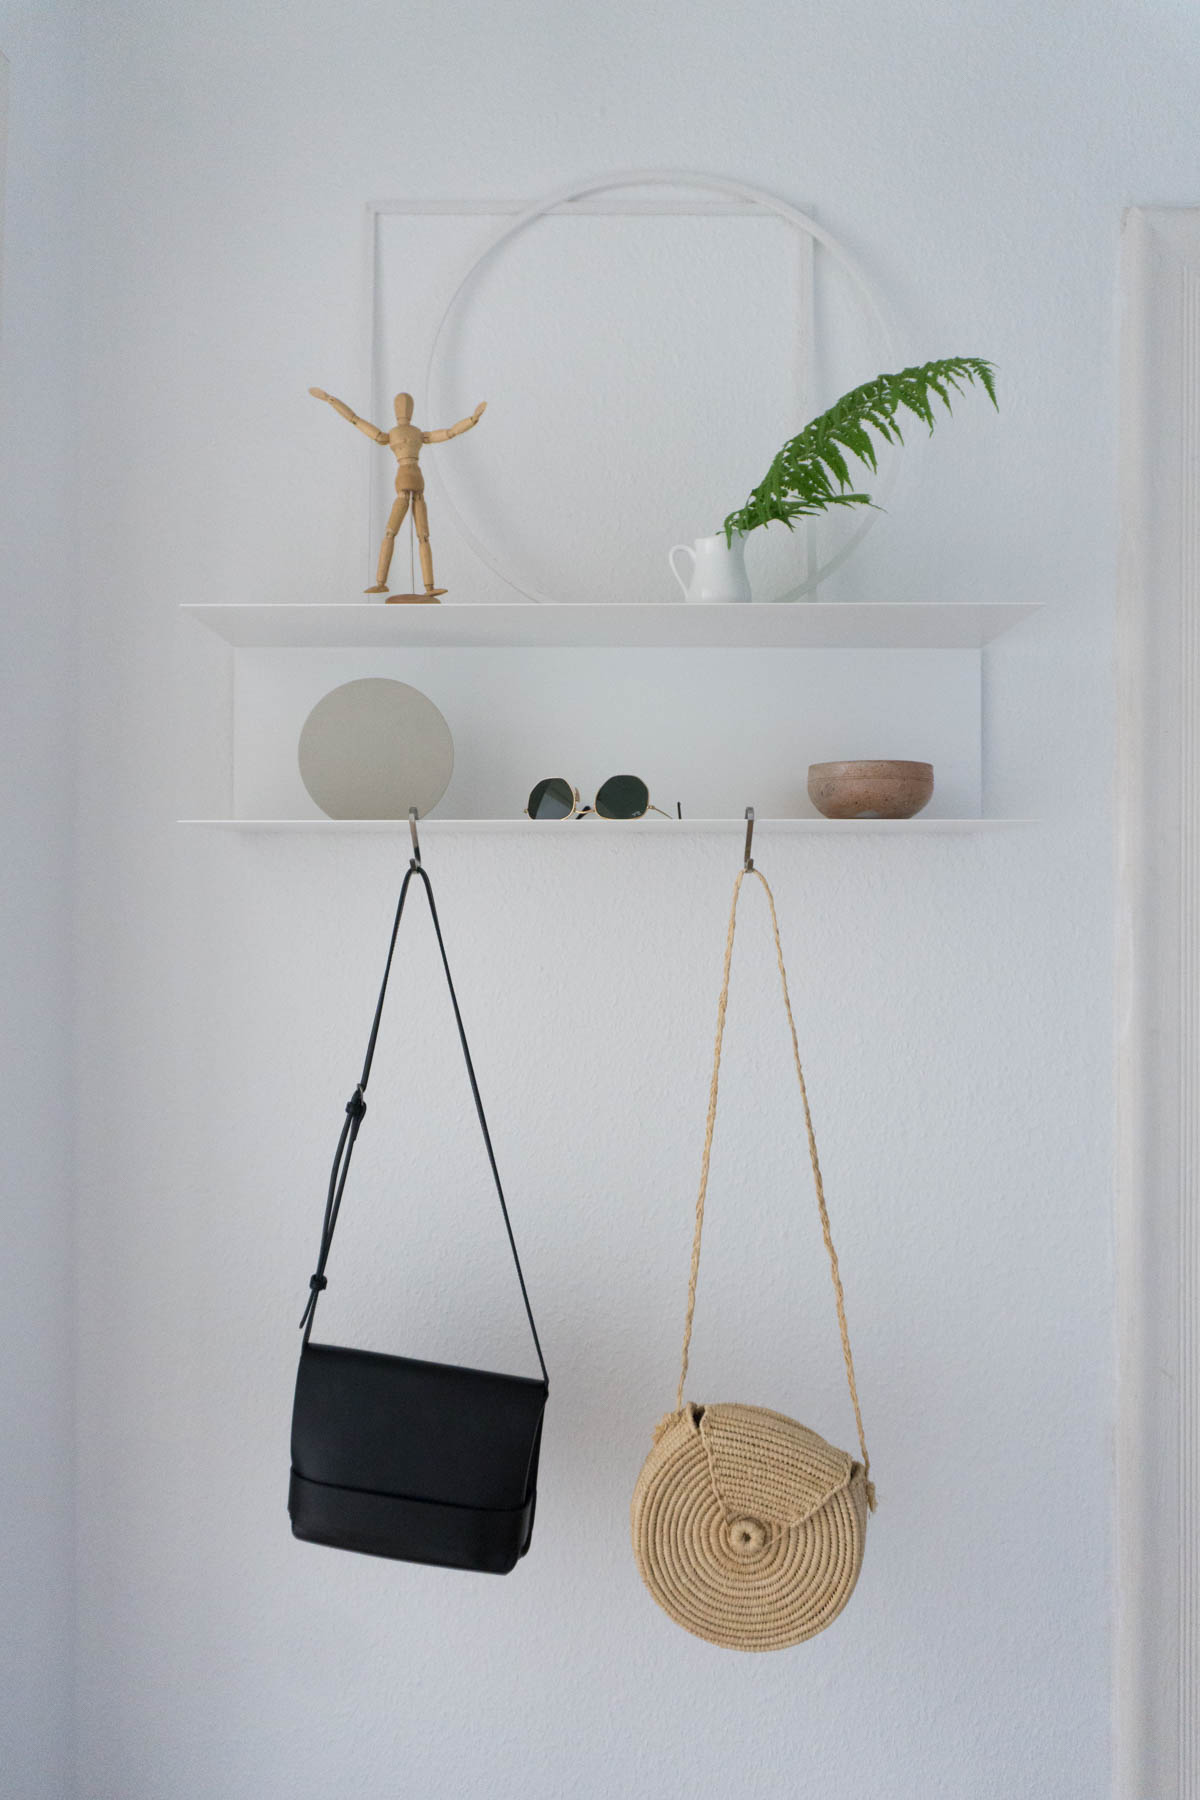 Scandinavian Interior / Hallway Storage / Minimalist Home / Berlin Flat / RG Daily Blog